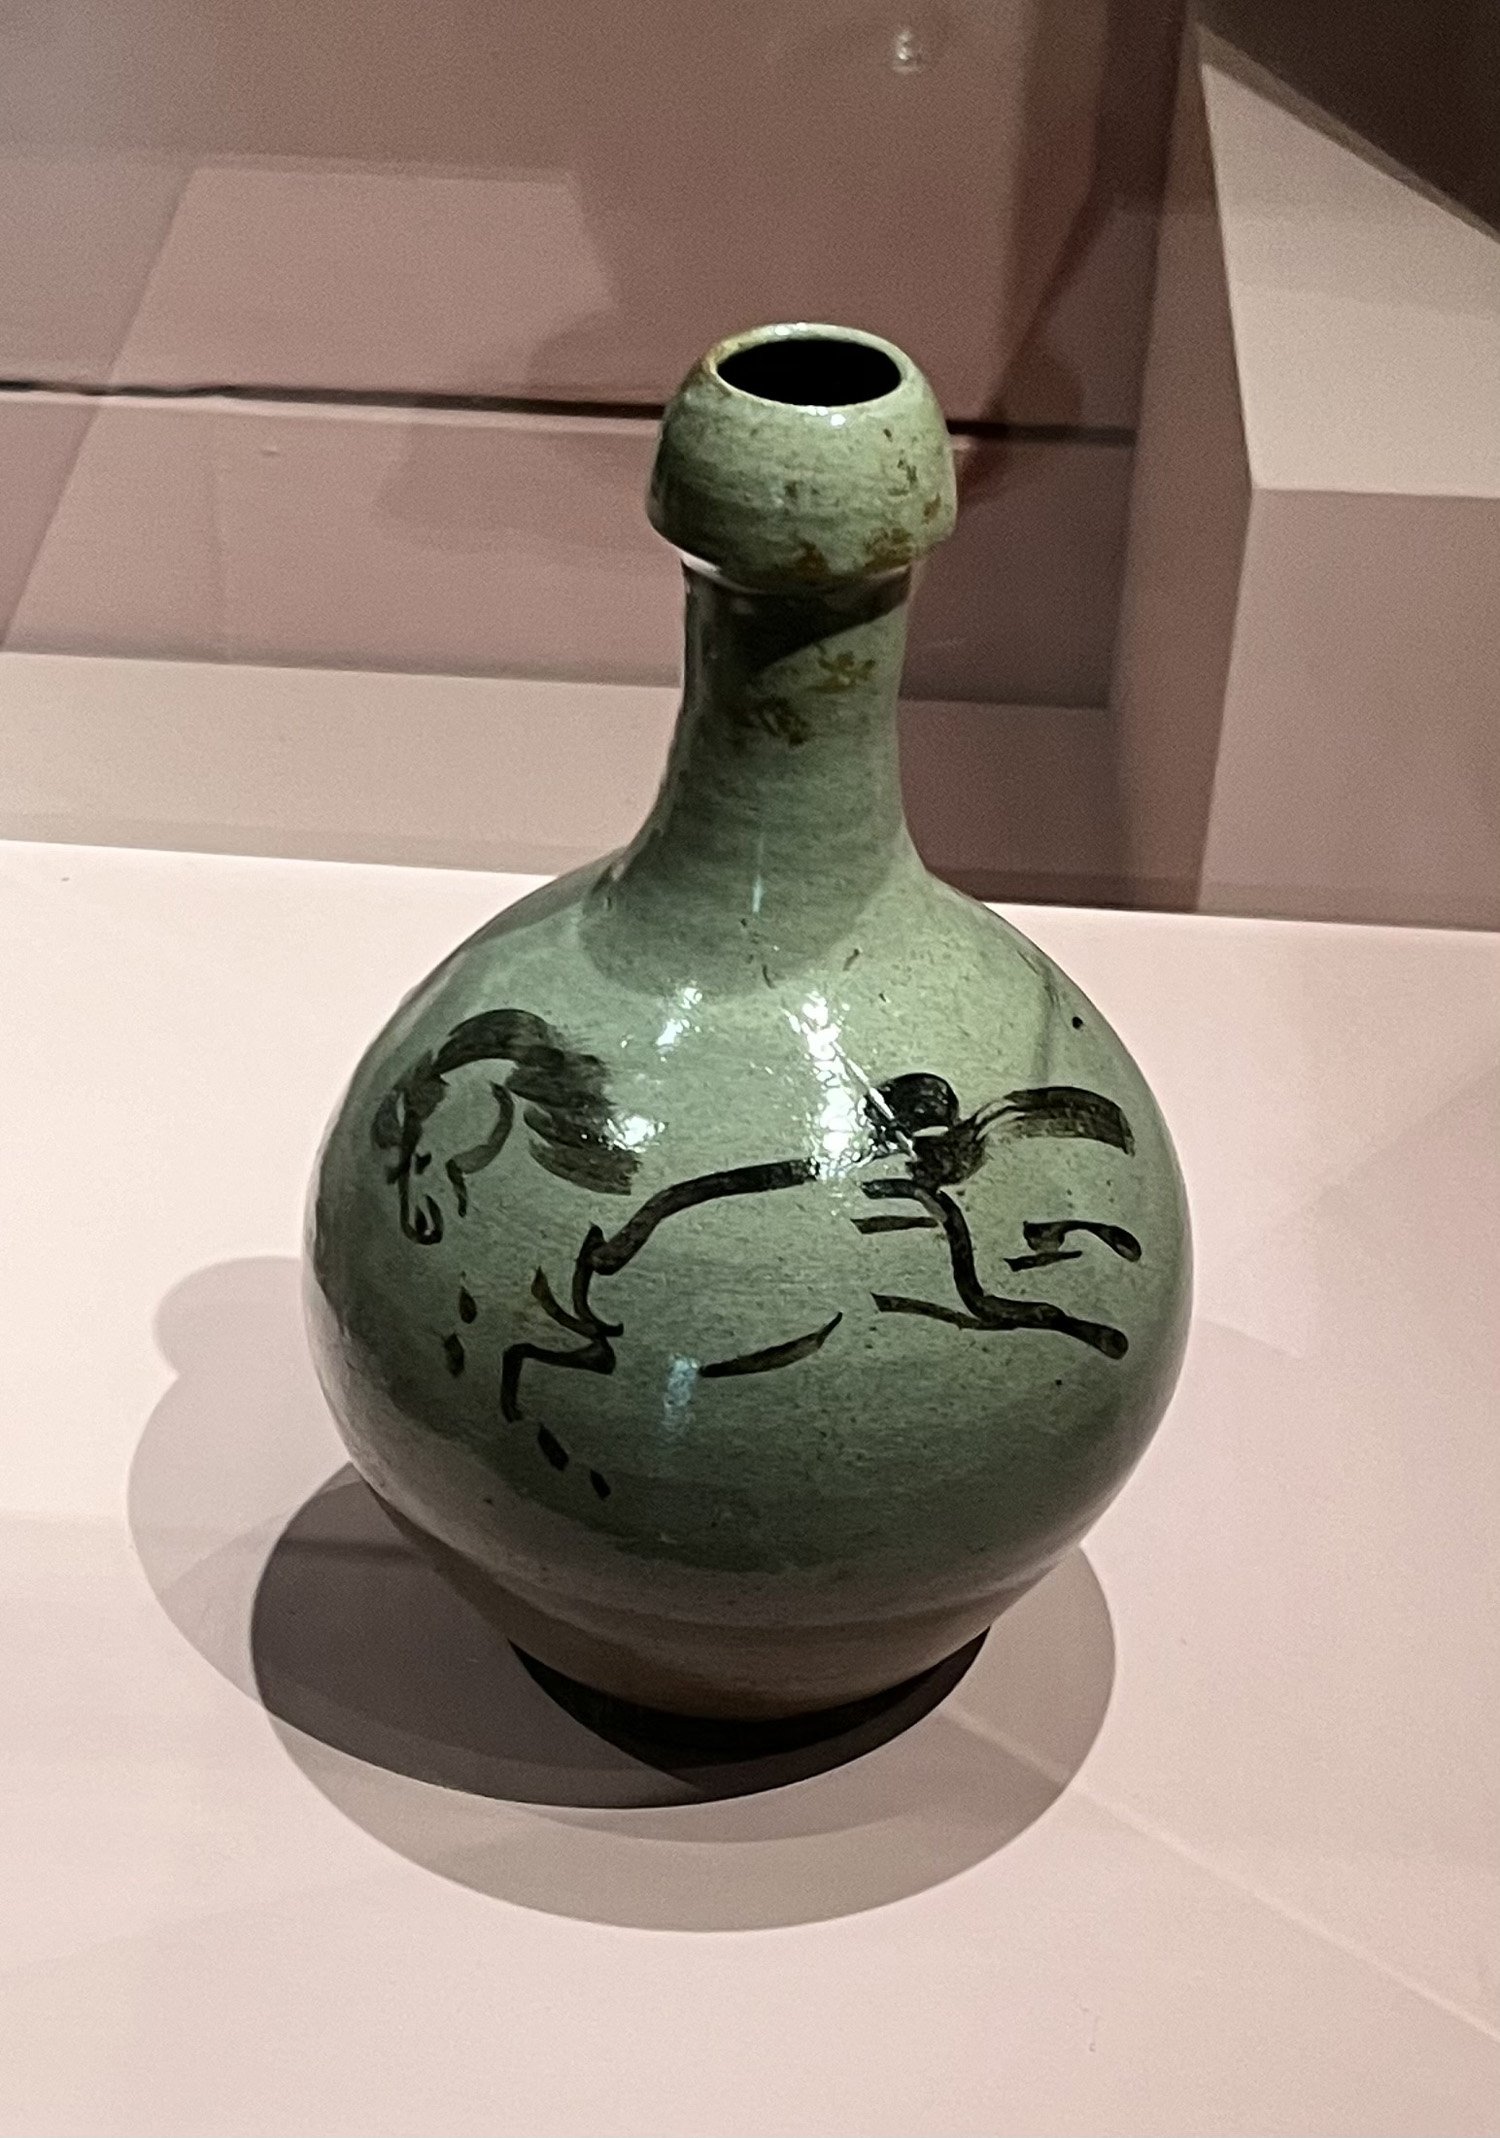 Mingei exhibition - April 24 - Green horse vase.jpg